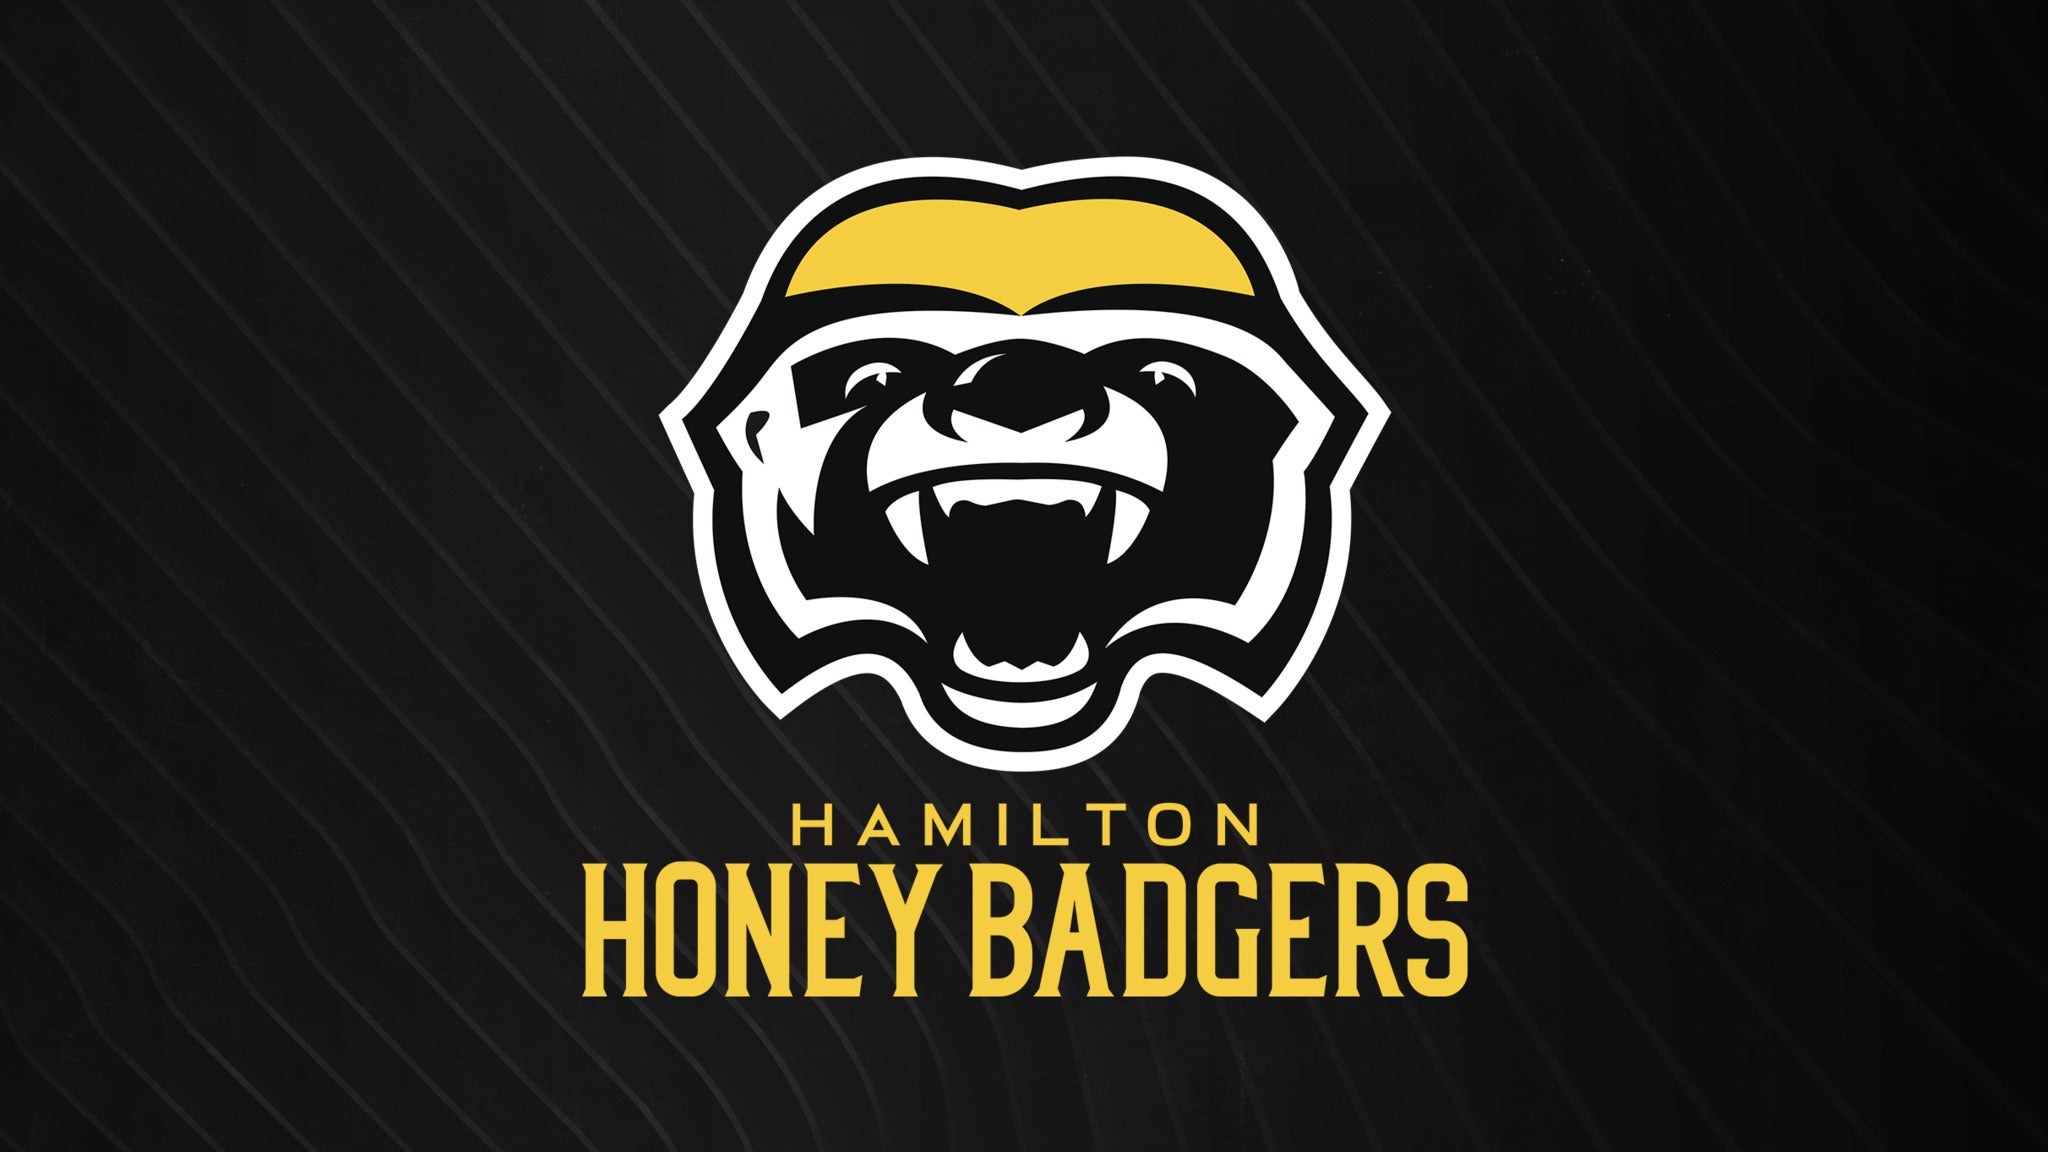 Hamilton Honey Badgers vs. Edmonton Stingers in Hamilton promo photo for Me + 3 Promotional  presale offer code